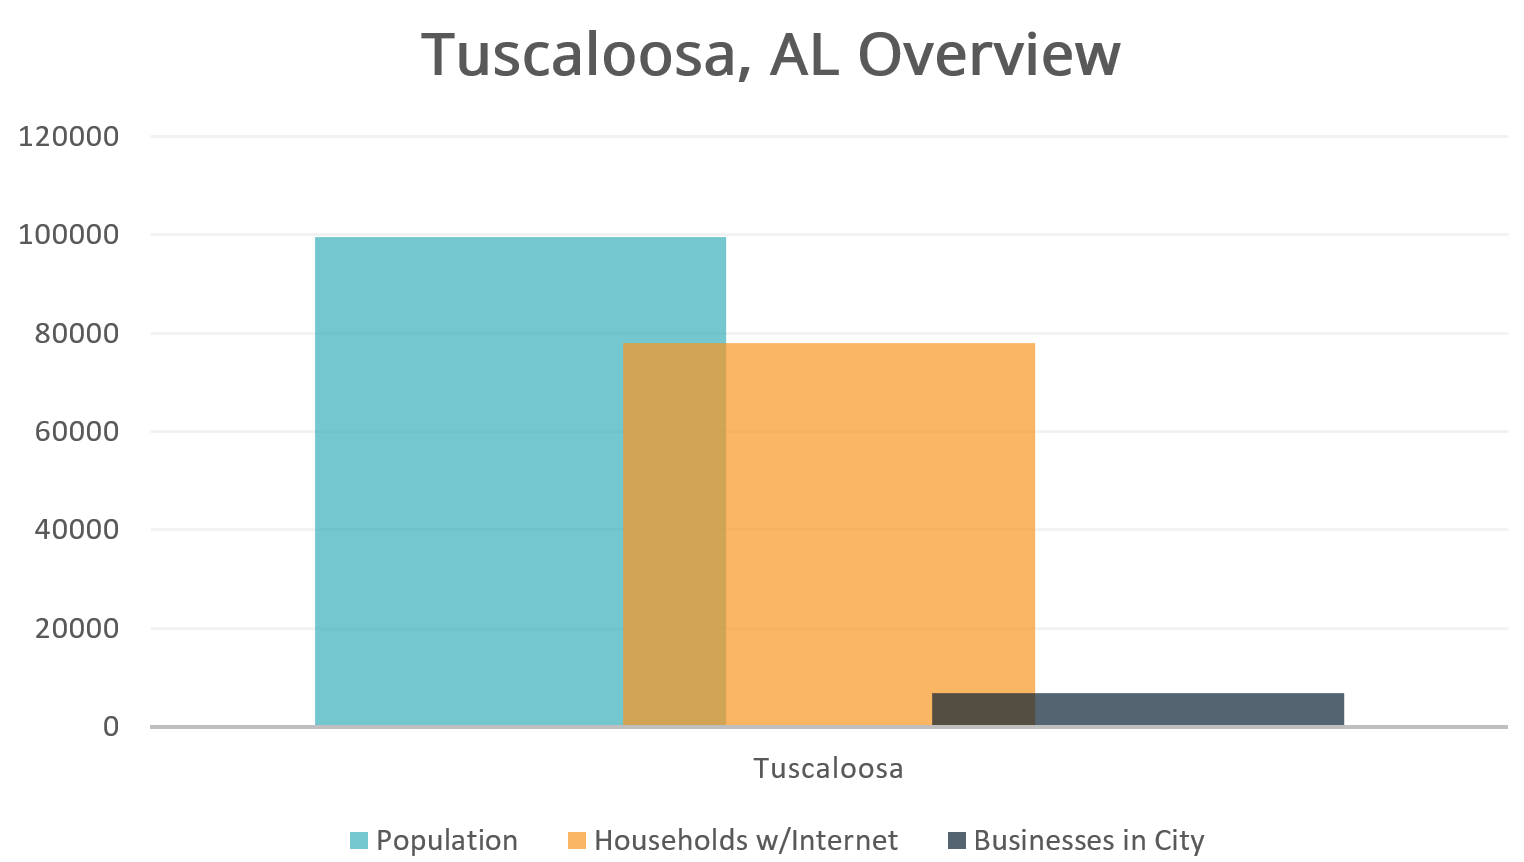 Tuscaloosa, AL Overview